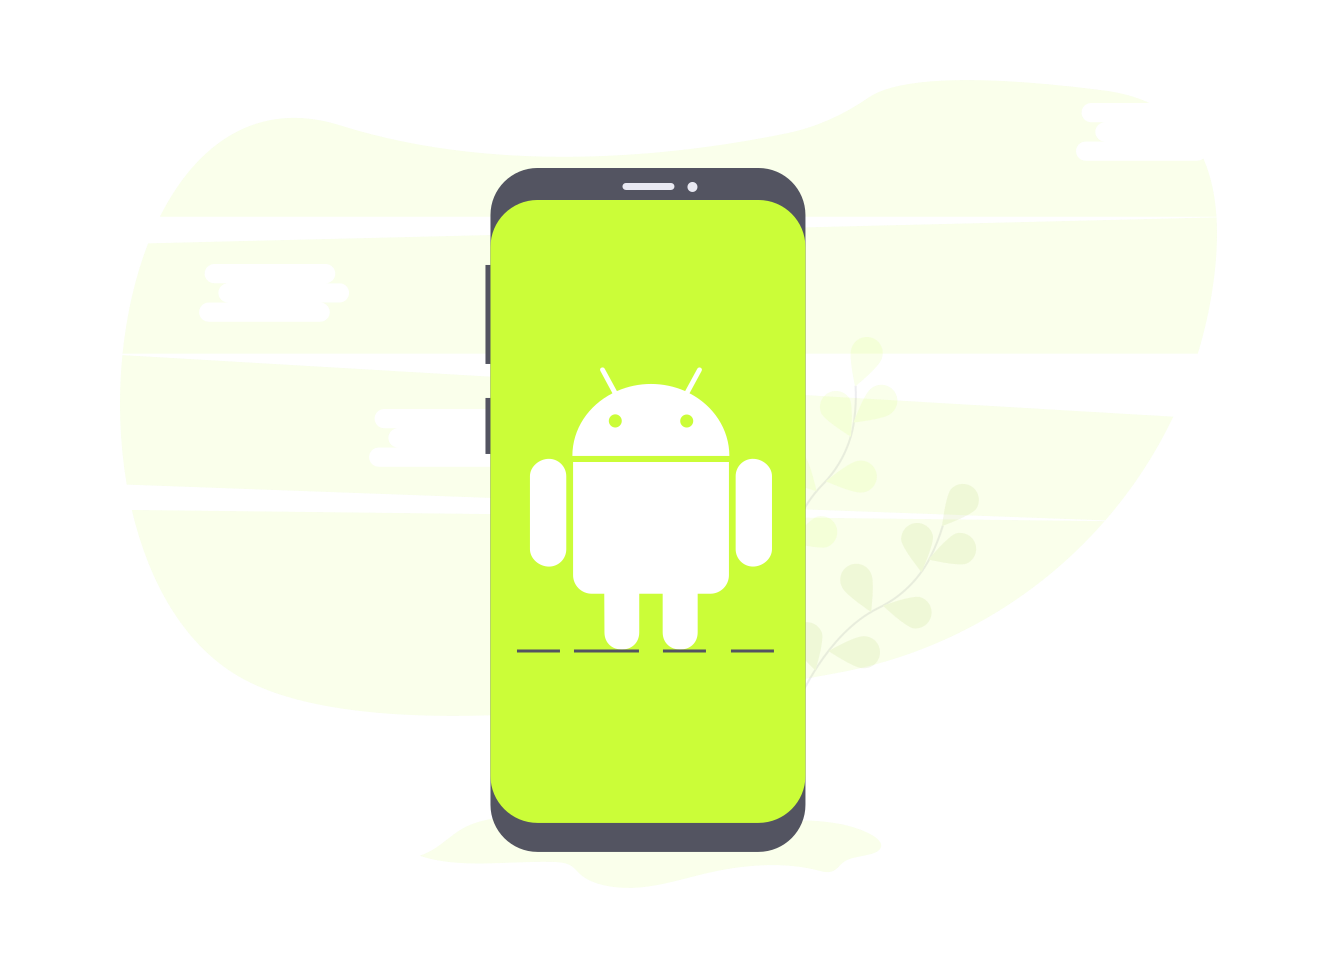 Android App Development Service